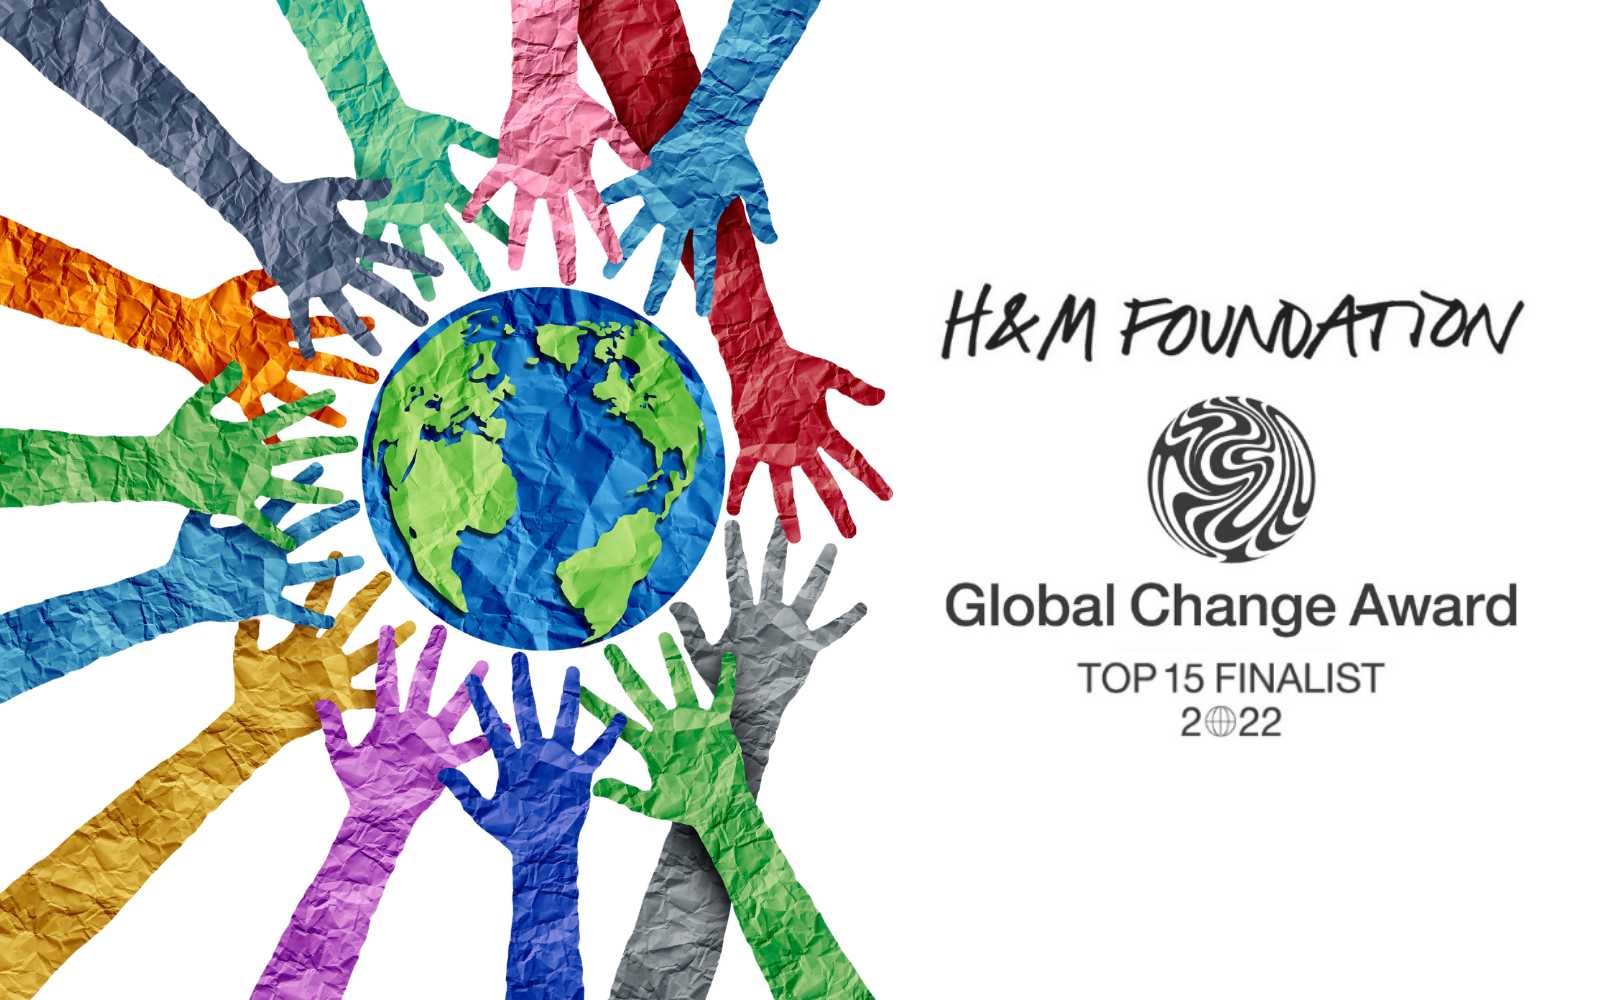 Top 15 Finalist - 2022 Global Change Award